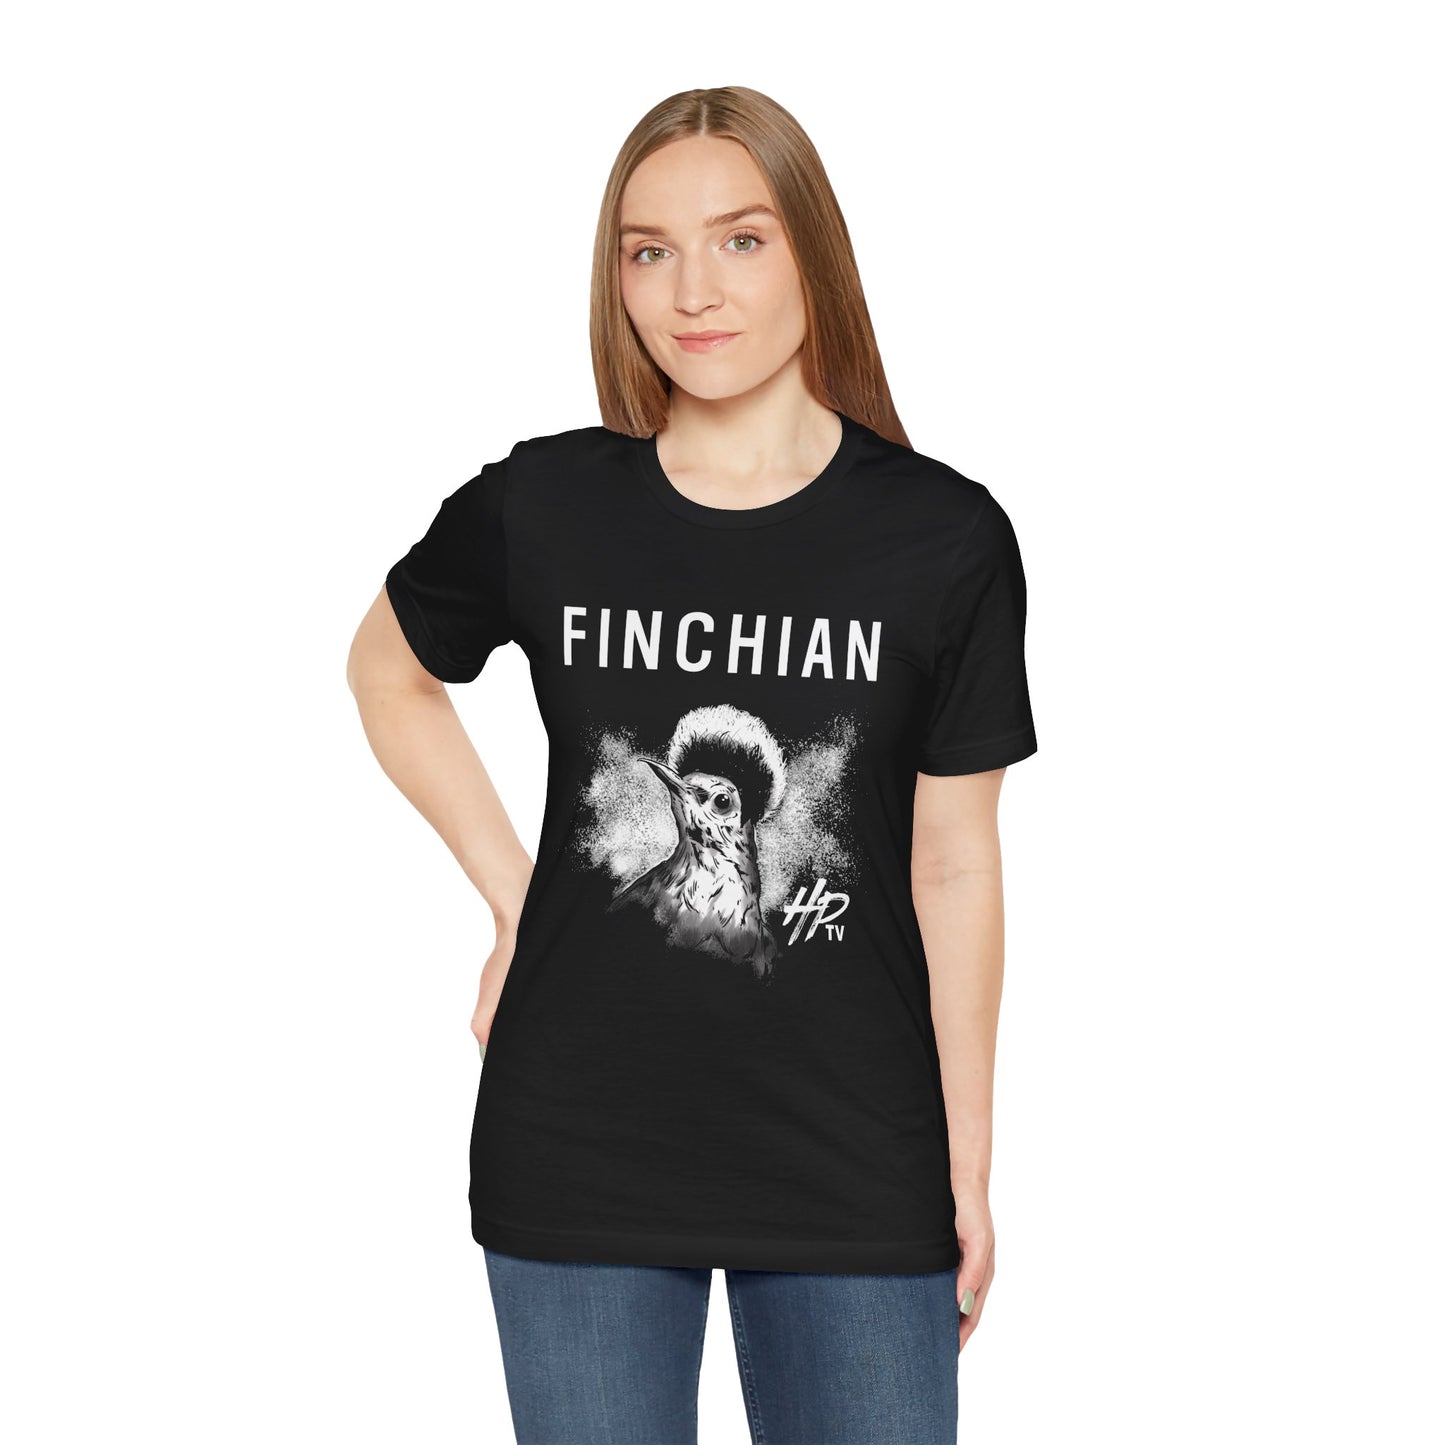 Horror Press Finchian T-Shirt - Finchian - David Lynch Fan - Horror Movie Fan T-Shirt - Horror Press Merch - Gift for Horror Movie Fans - Scary Movie Lover Tshirt